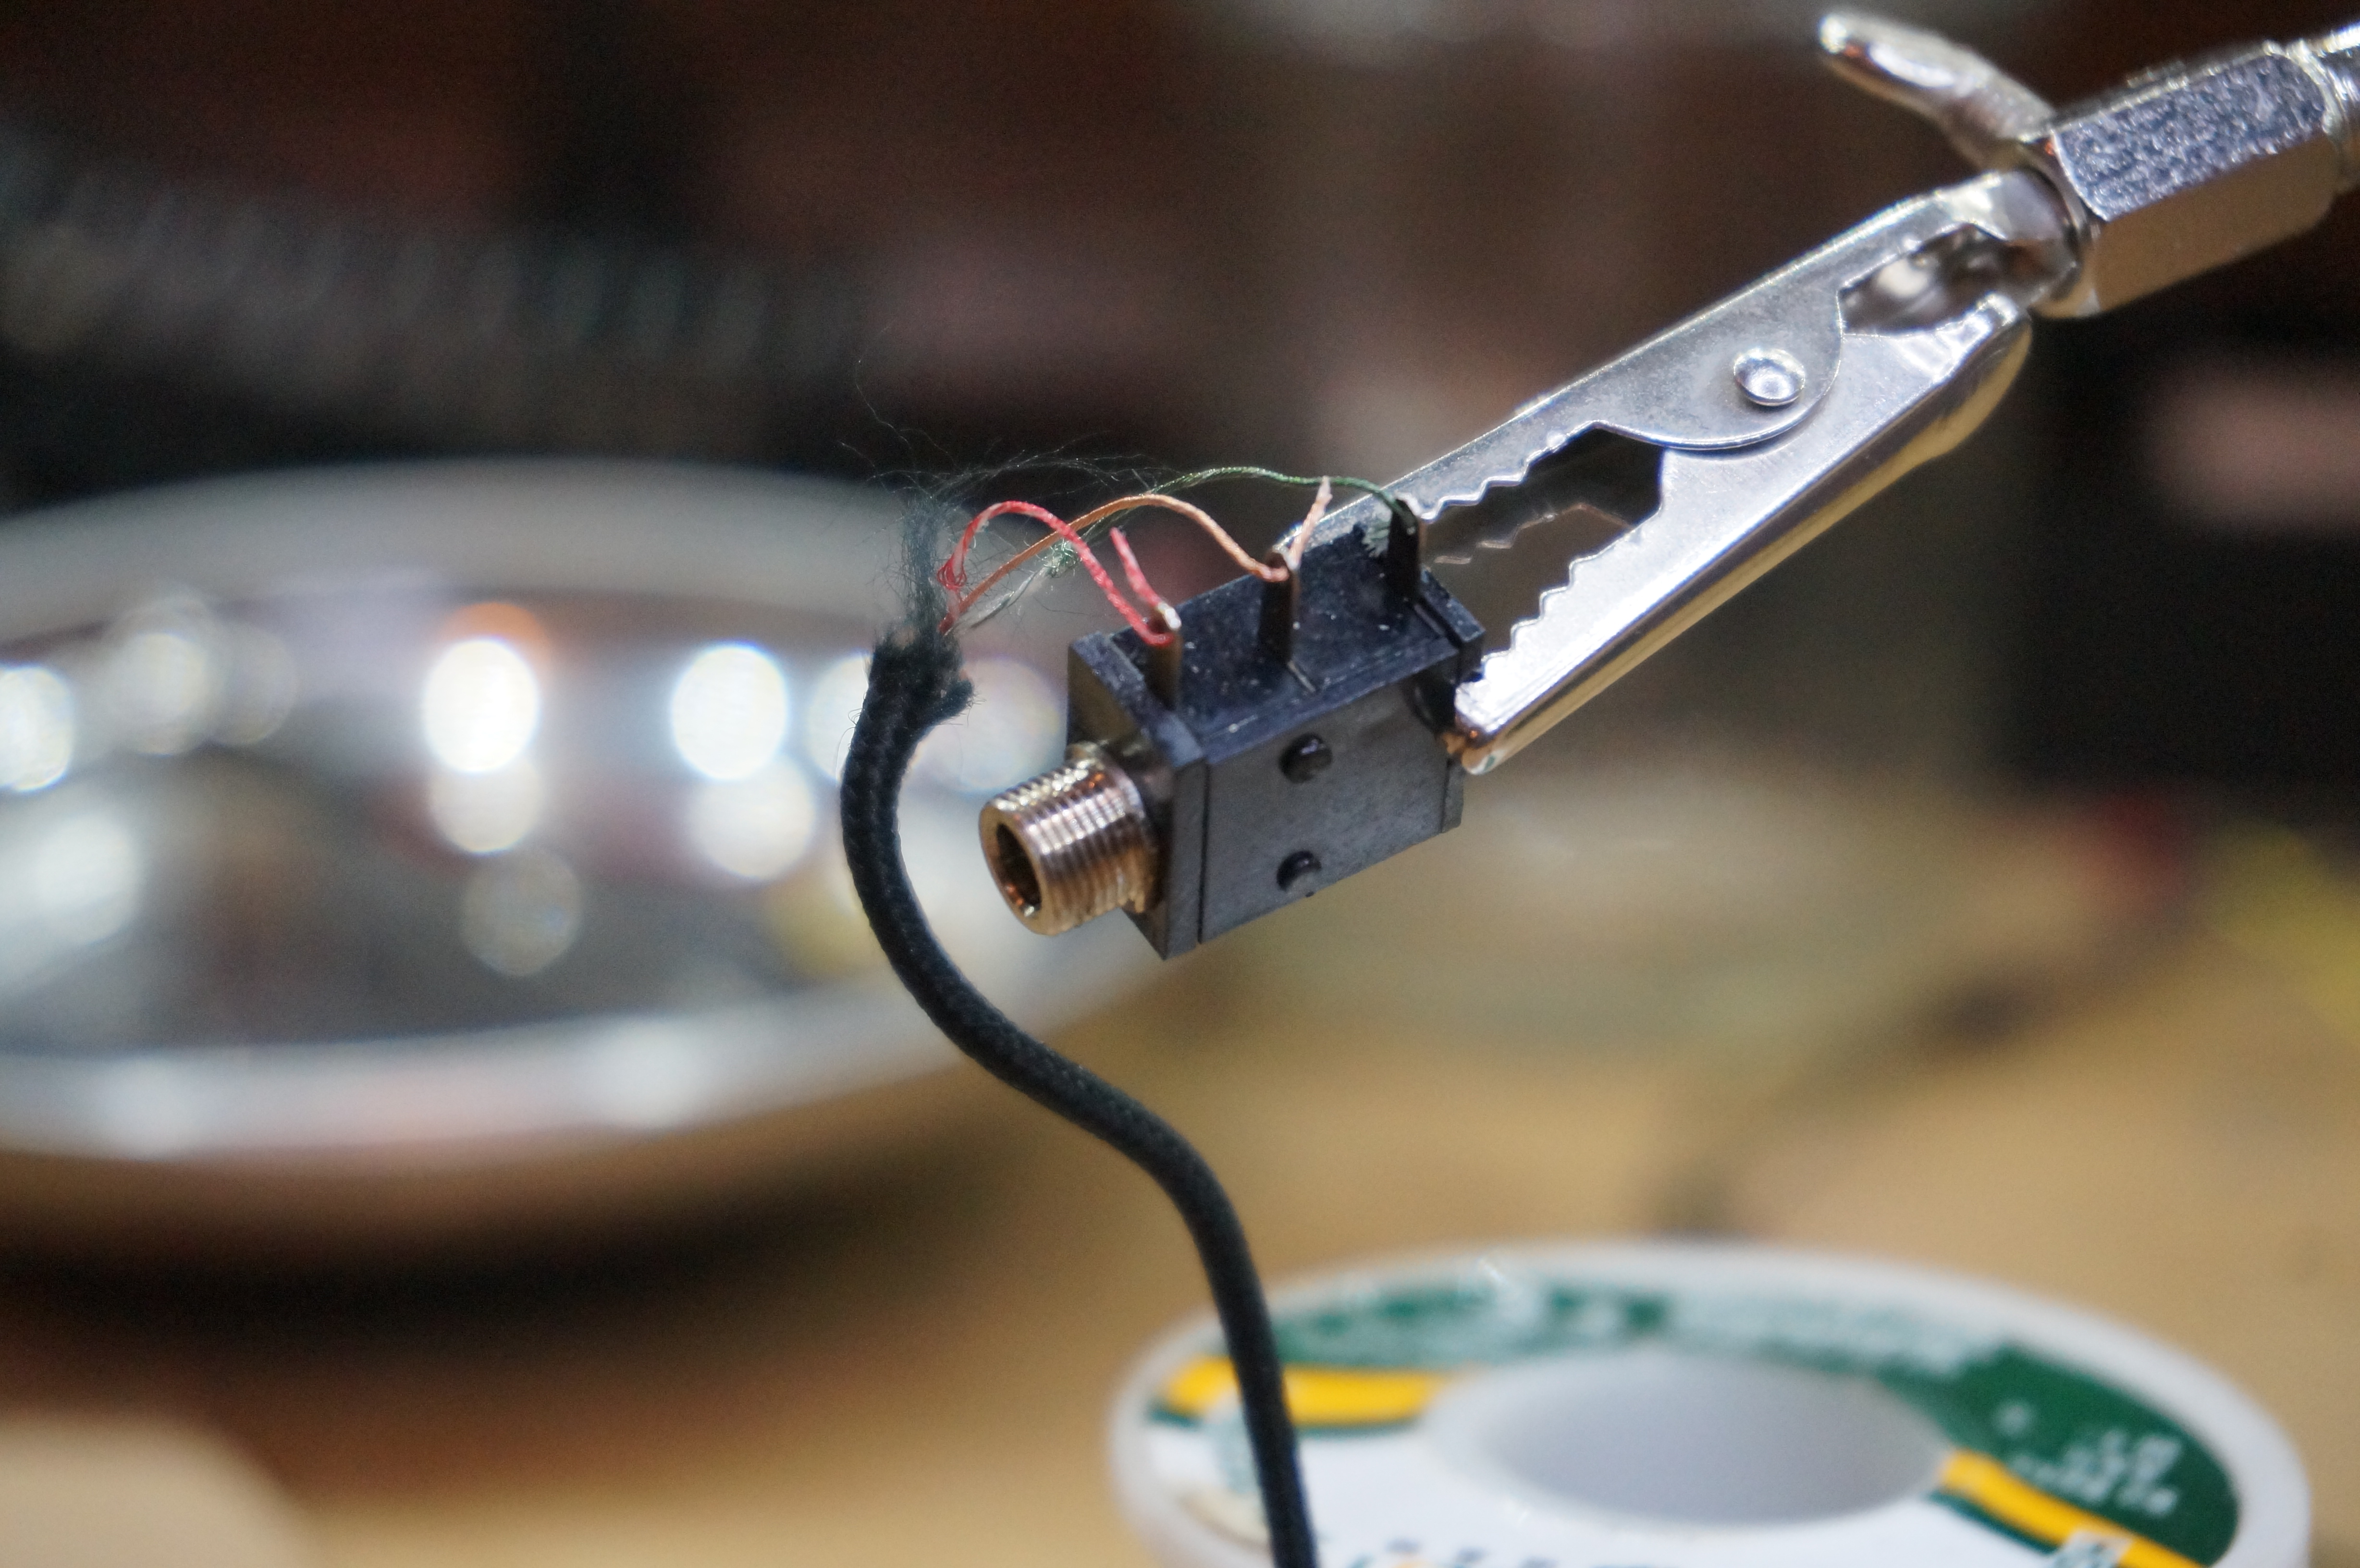 soldering wires together